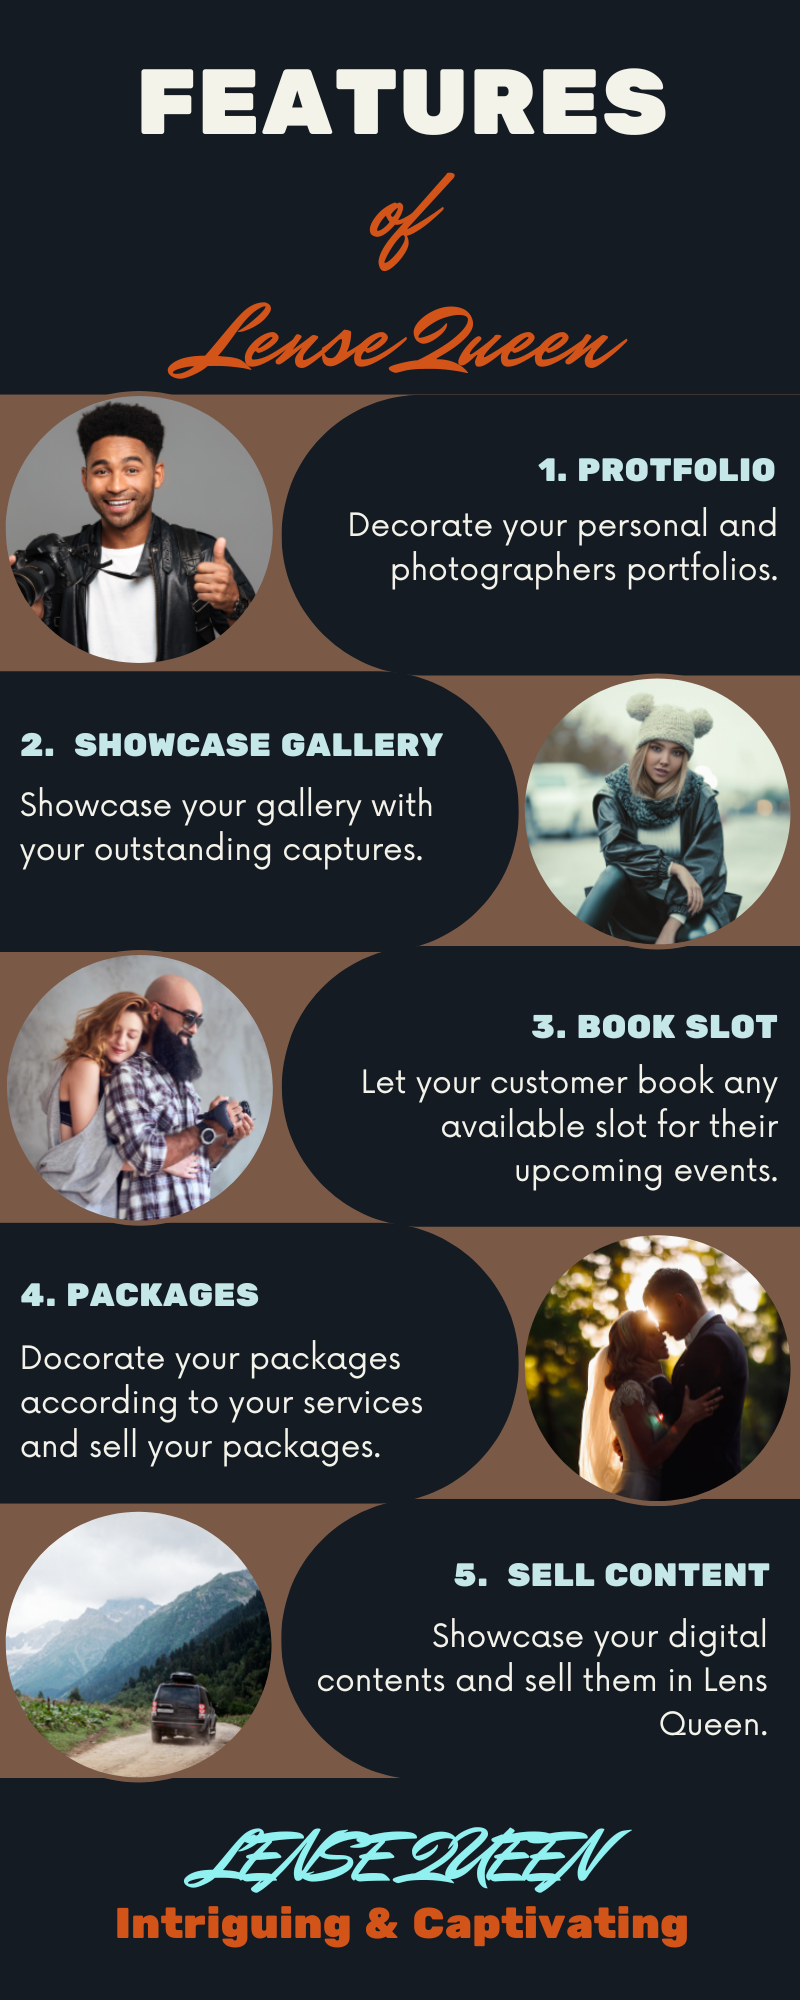 LensQueen - Photographers Portfolio, Booking, and Digital Content Selling Platform - 1